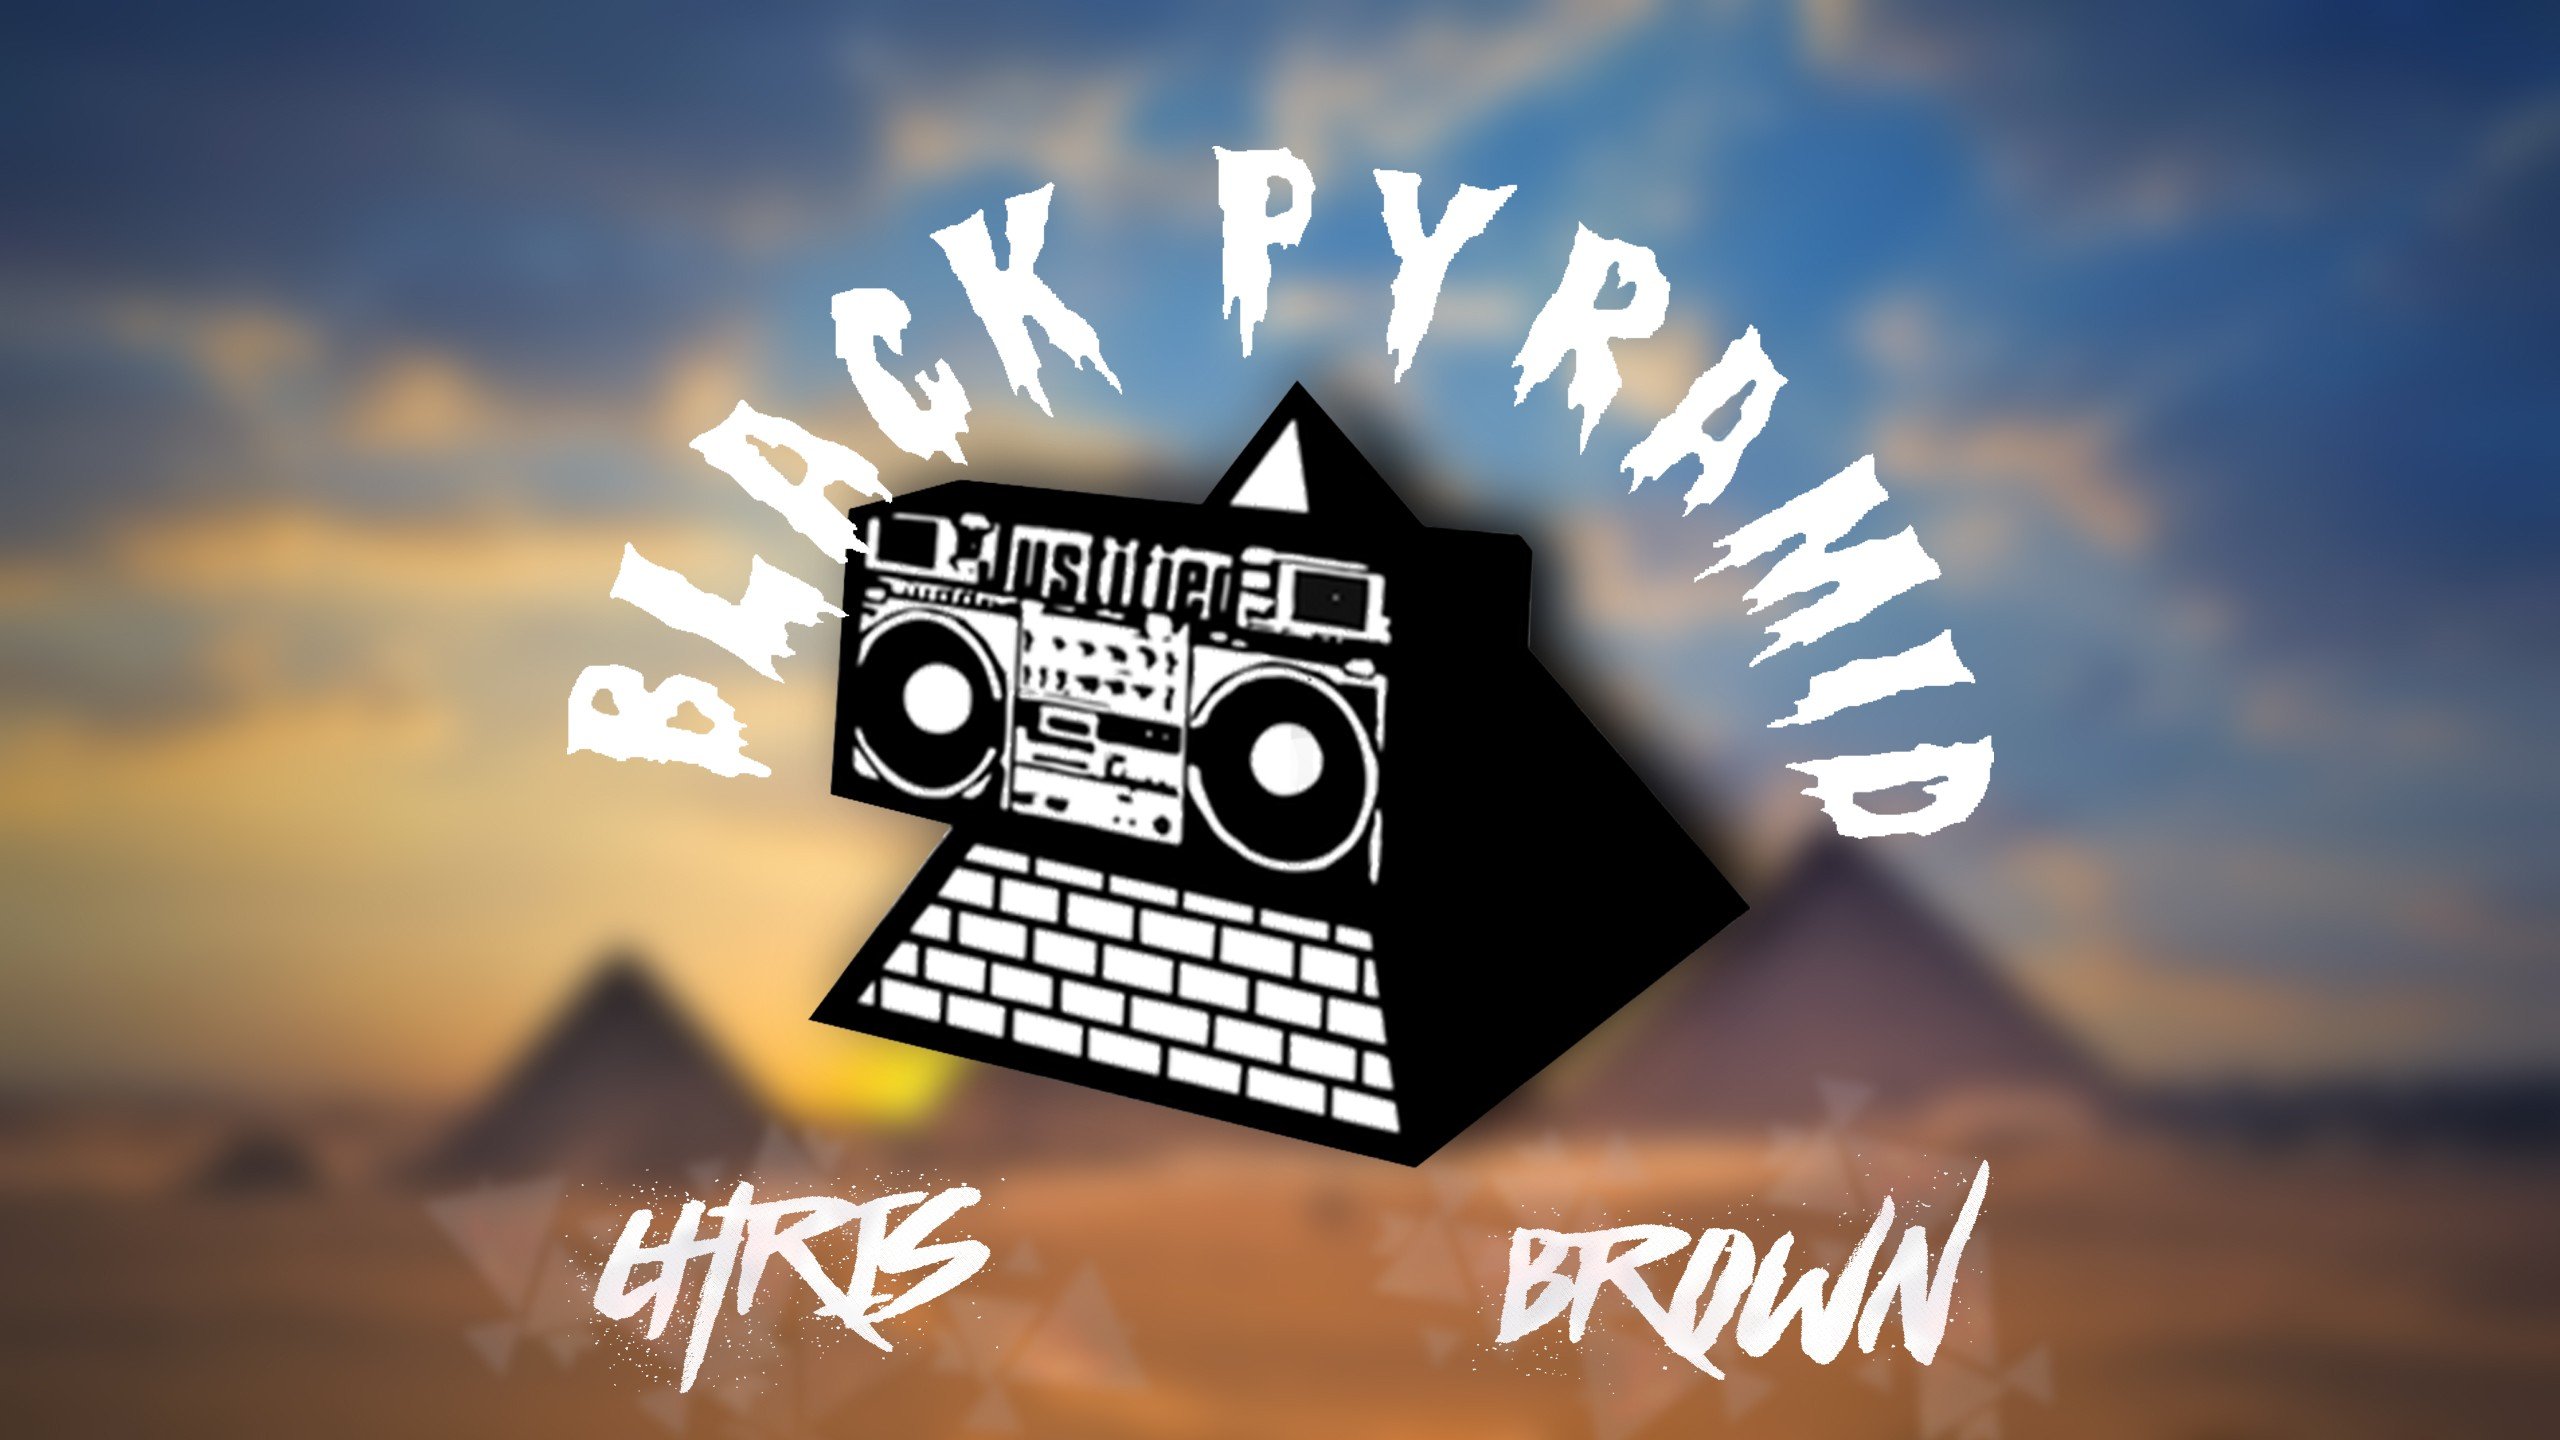 Black Pyramid Chris Brown Breezy Wallpaper HD Desktop And